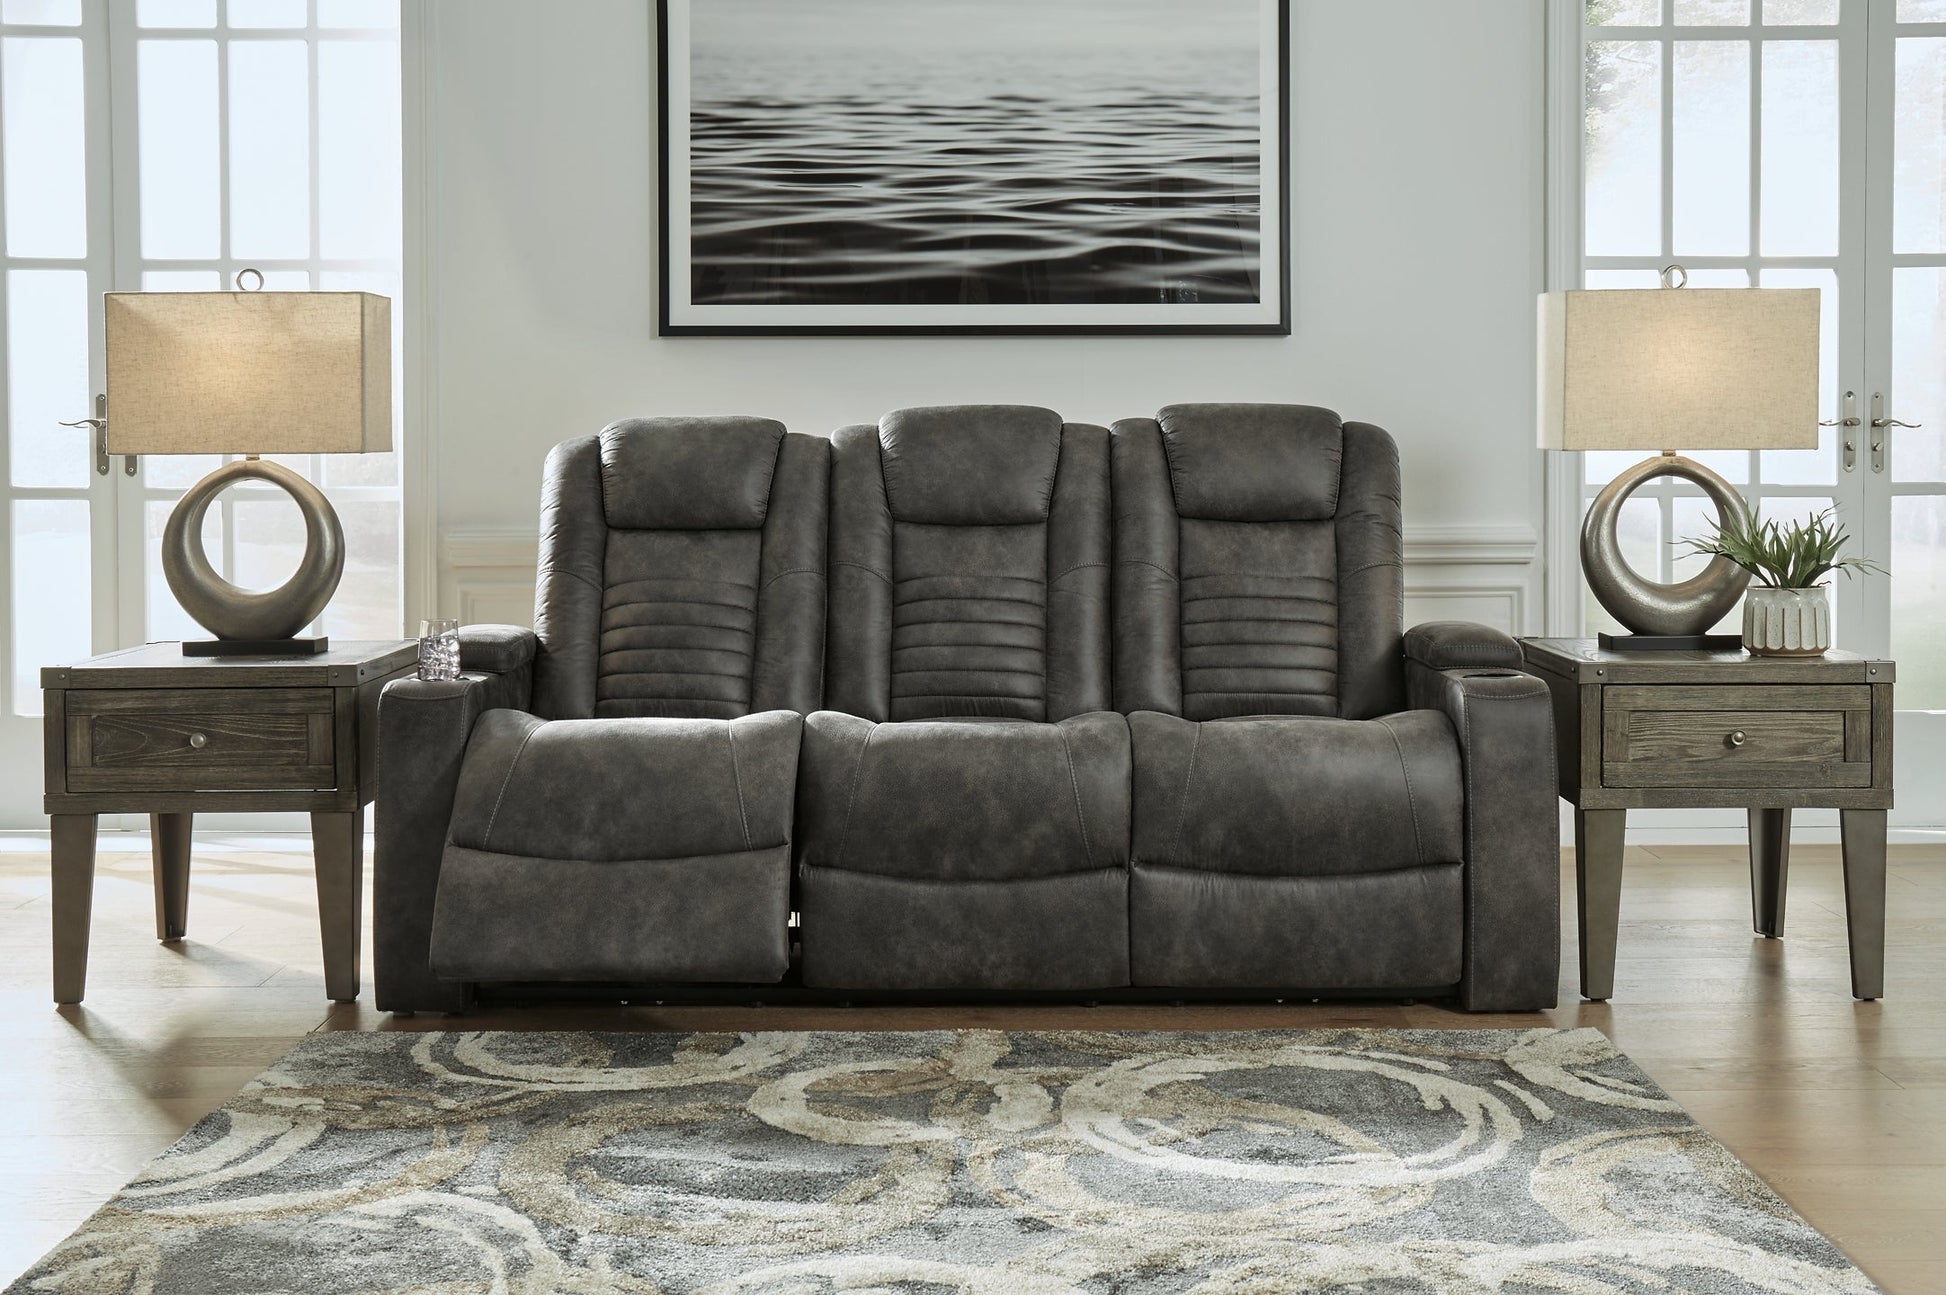 Soundcheck PWR REC Sofa with ADJ Headrest at Cloud 9 Mattress & Furniture furniture, home furnishing, home decor